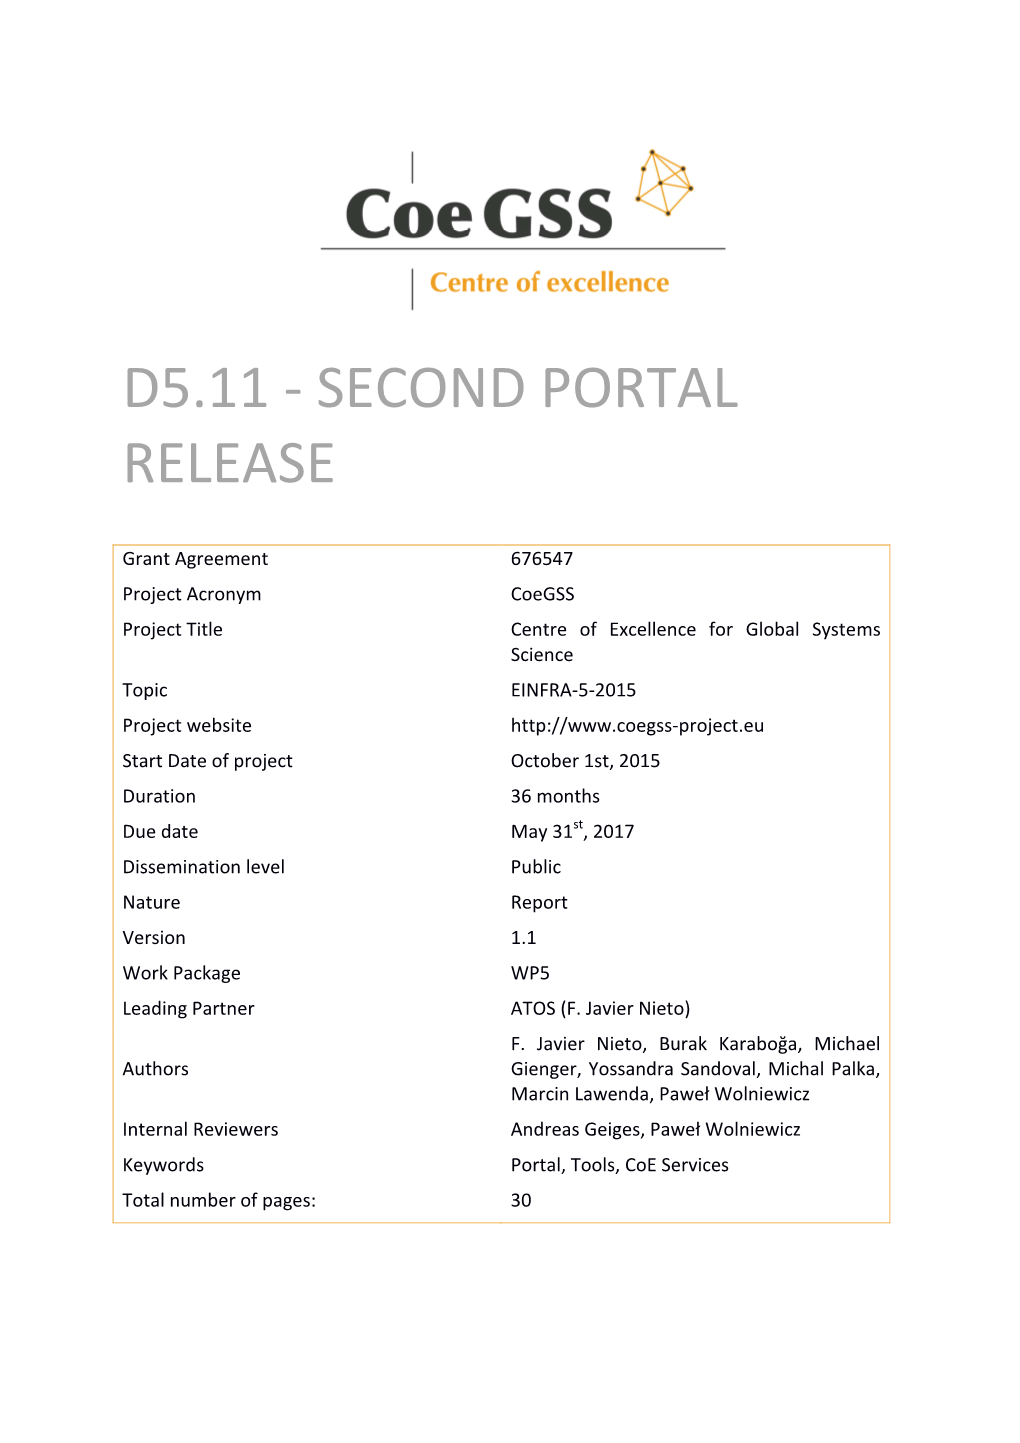 D5.11 Second Portal Release